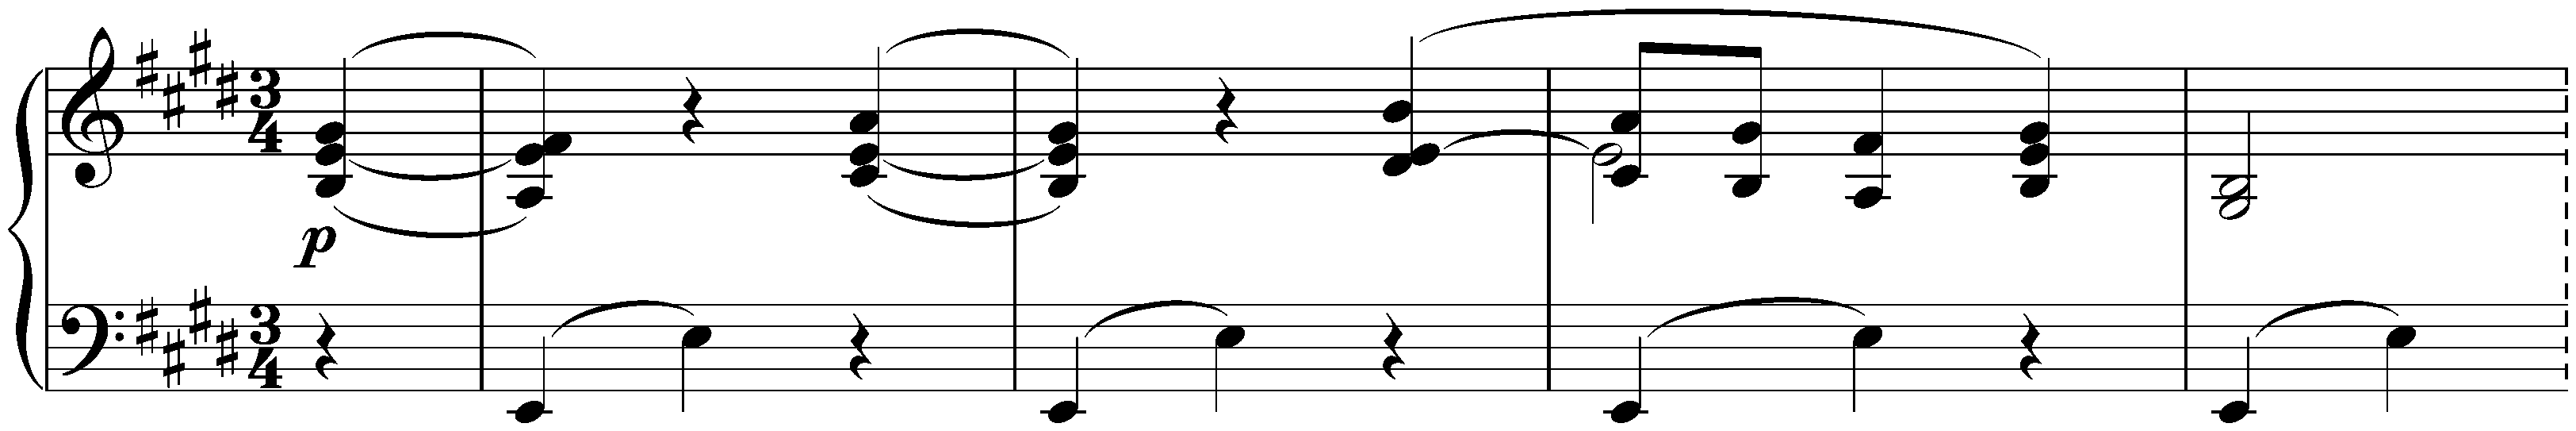 Sixteen Waltzes, op. 39; 12. E major (simplified version)